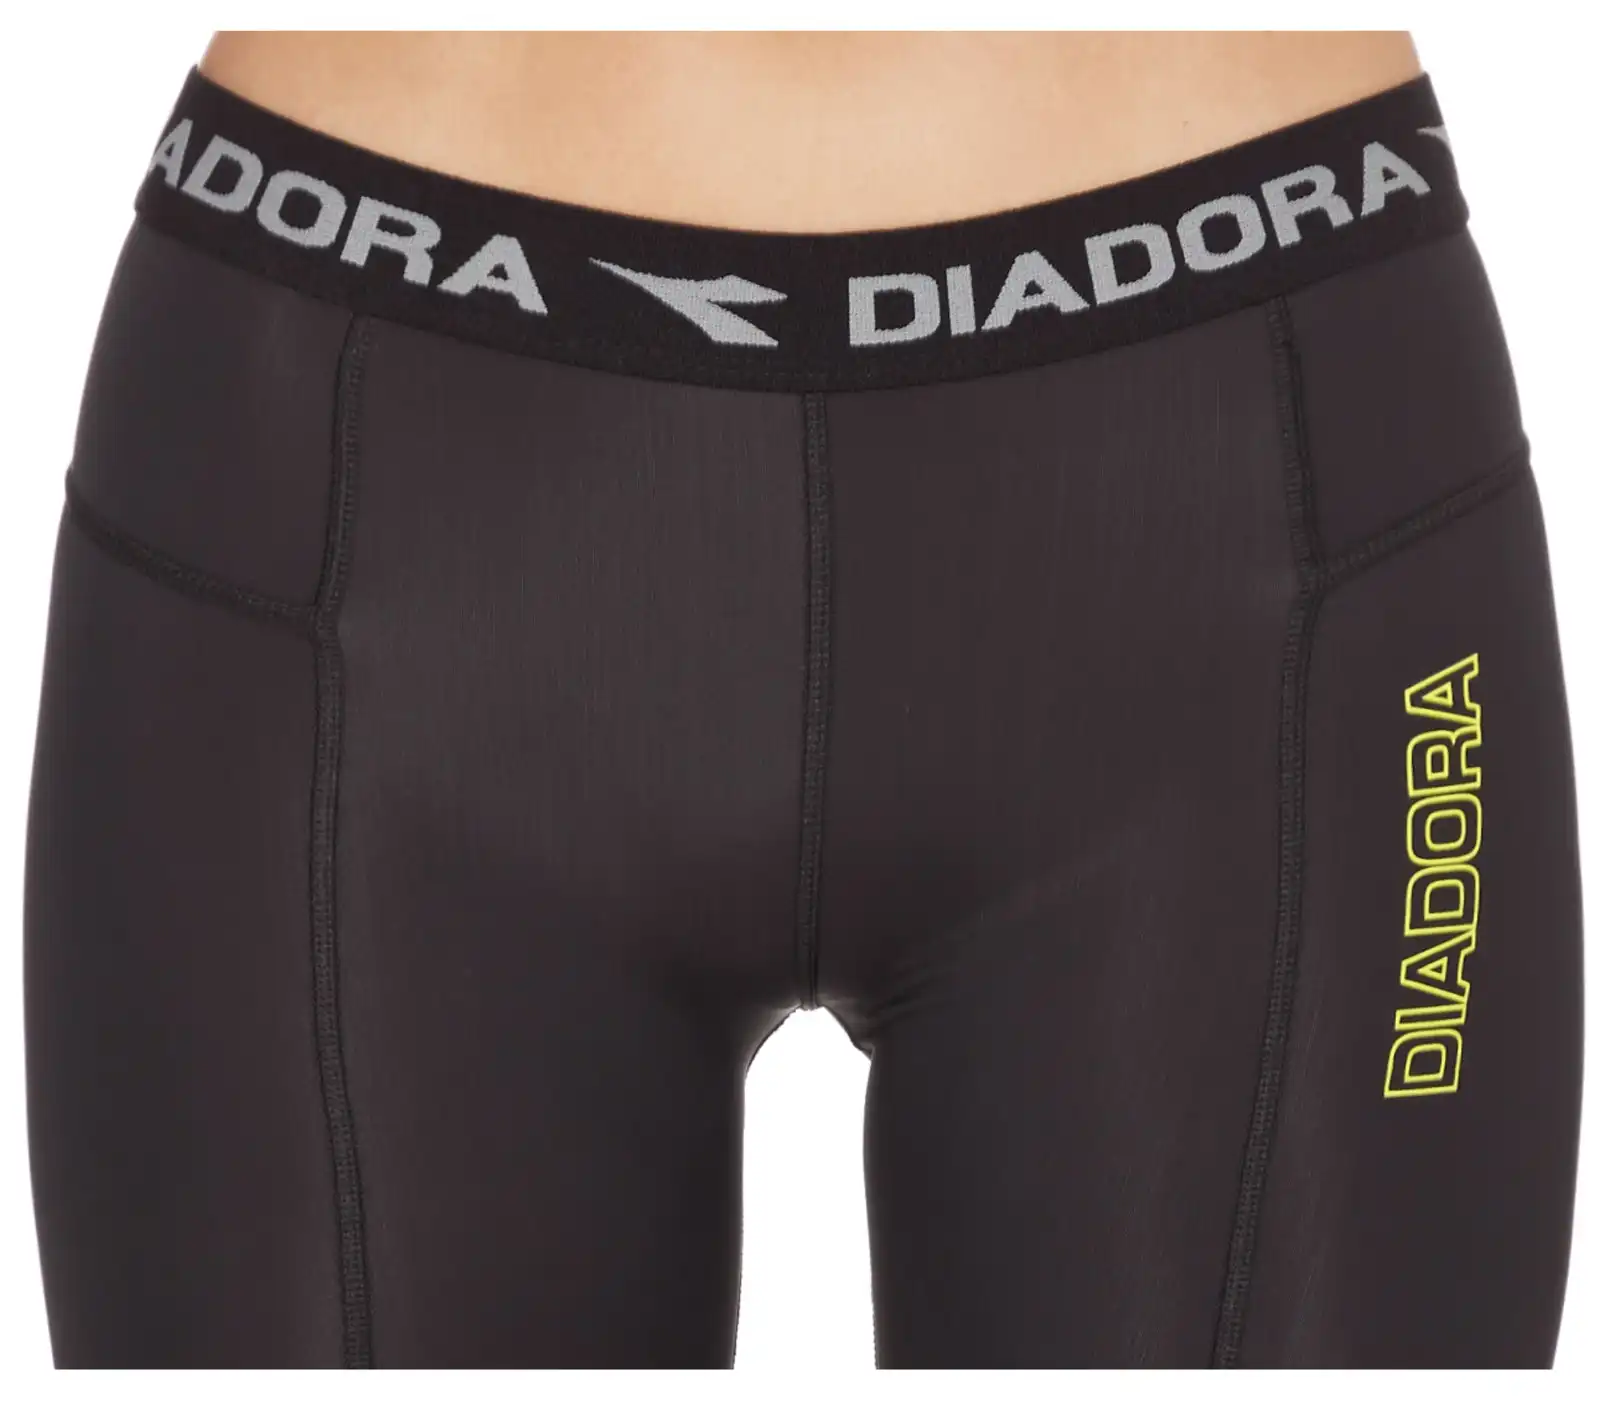 Diadora Ladies Compression Sports 3/4 Tights Gym Yoga Thermals - Black